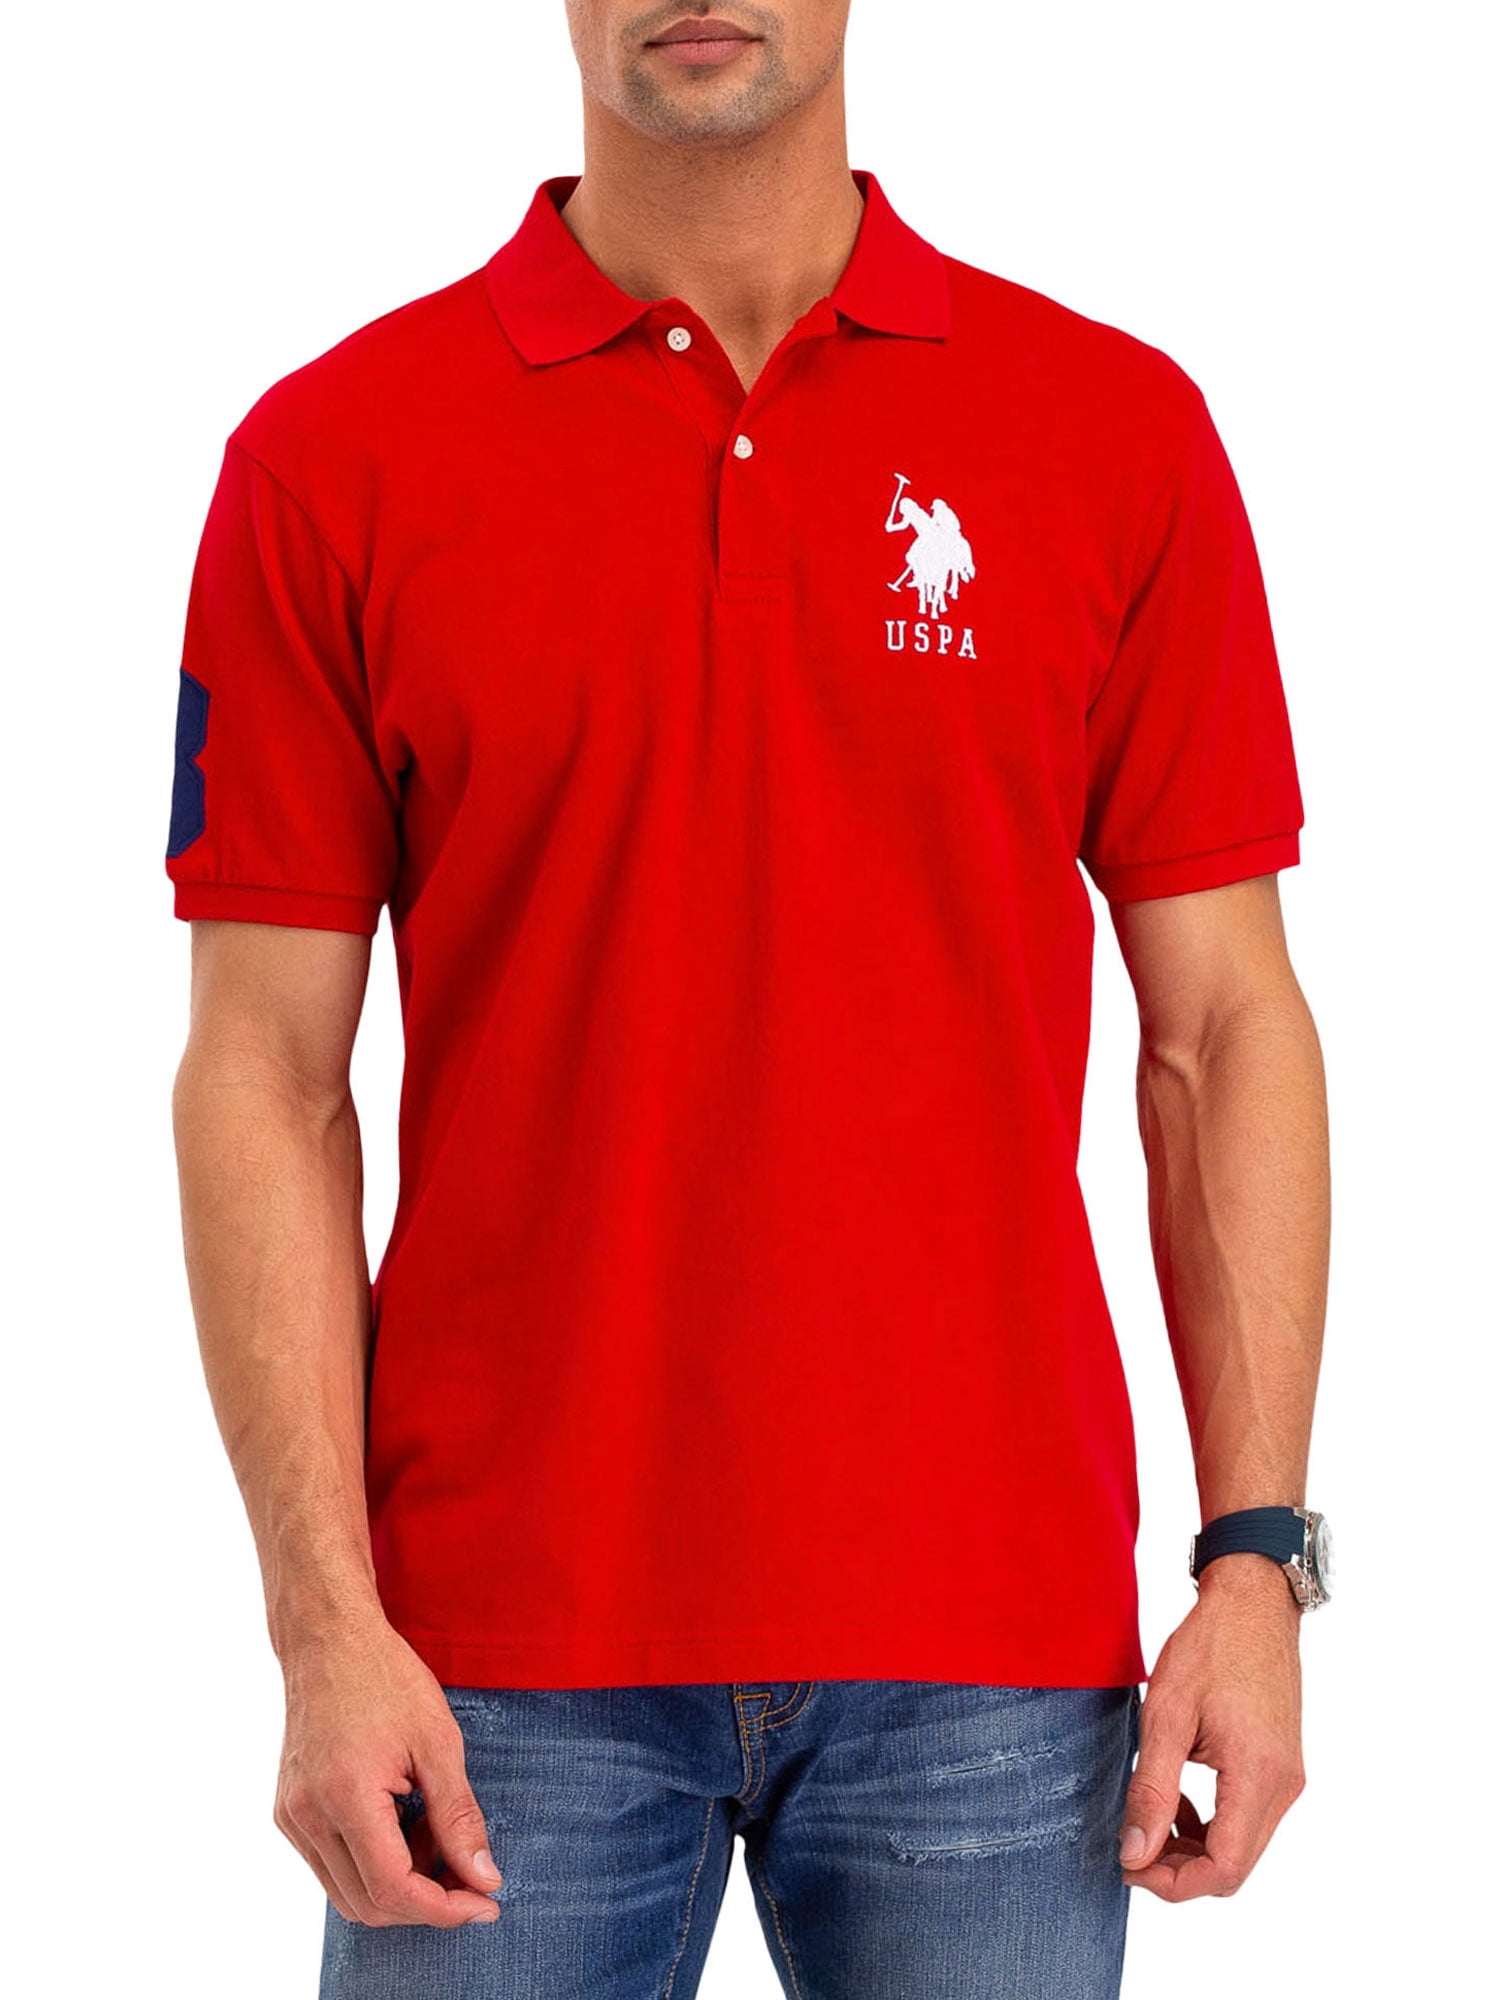 U.S Polo Assn Mens Printed Short Sleeve Classic Fit Pique Shirt 